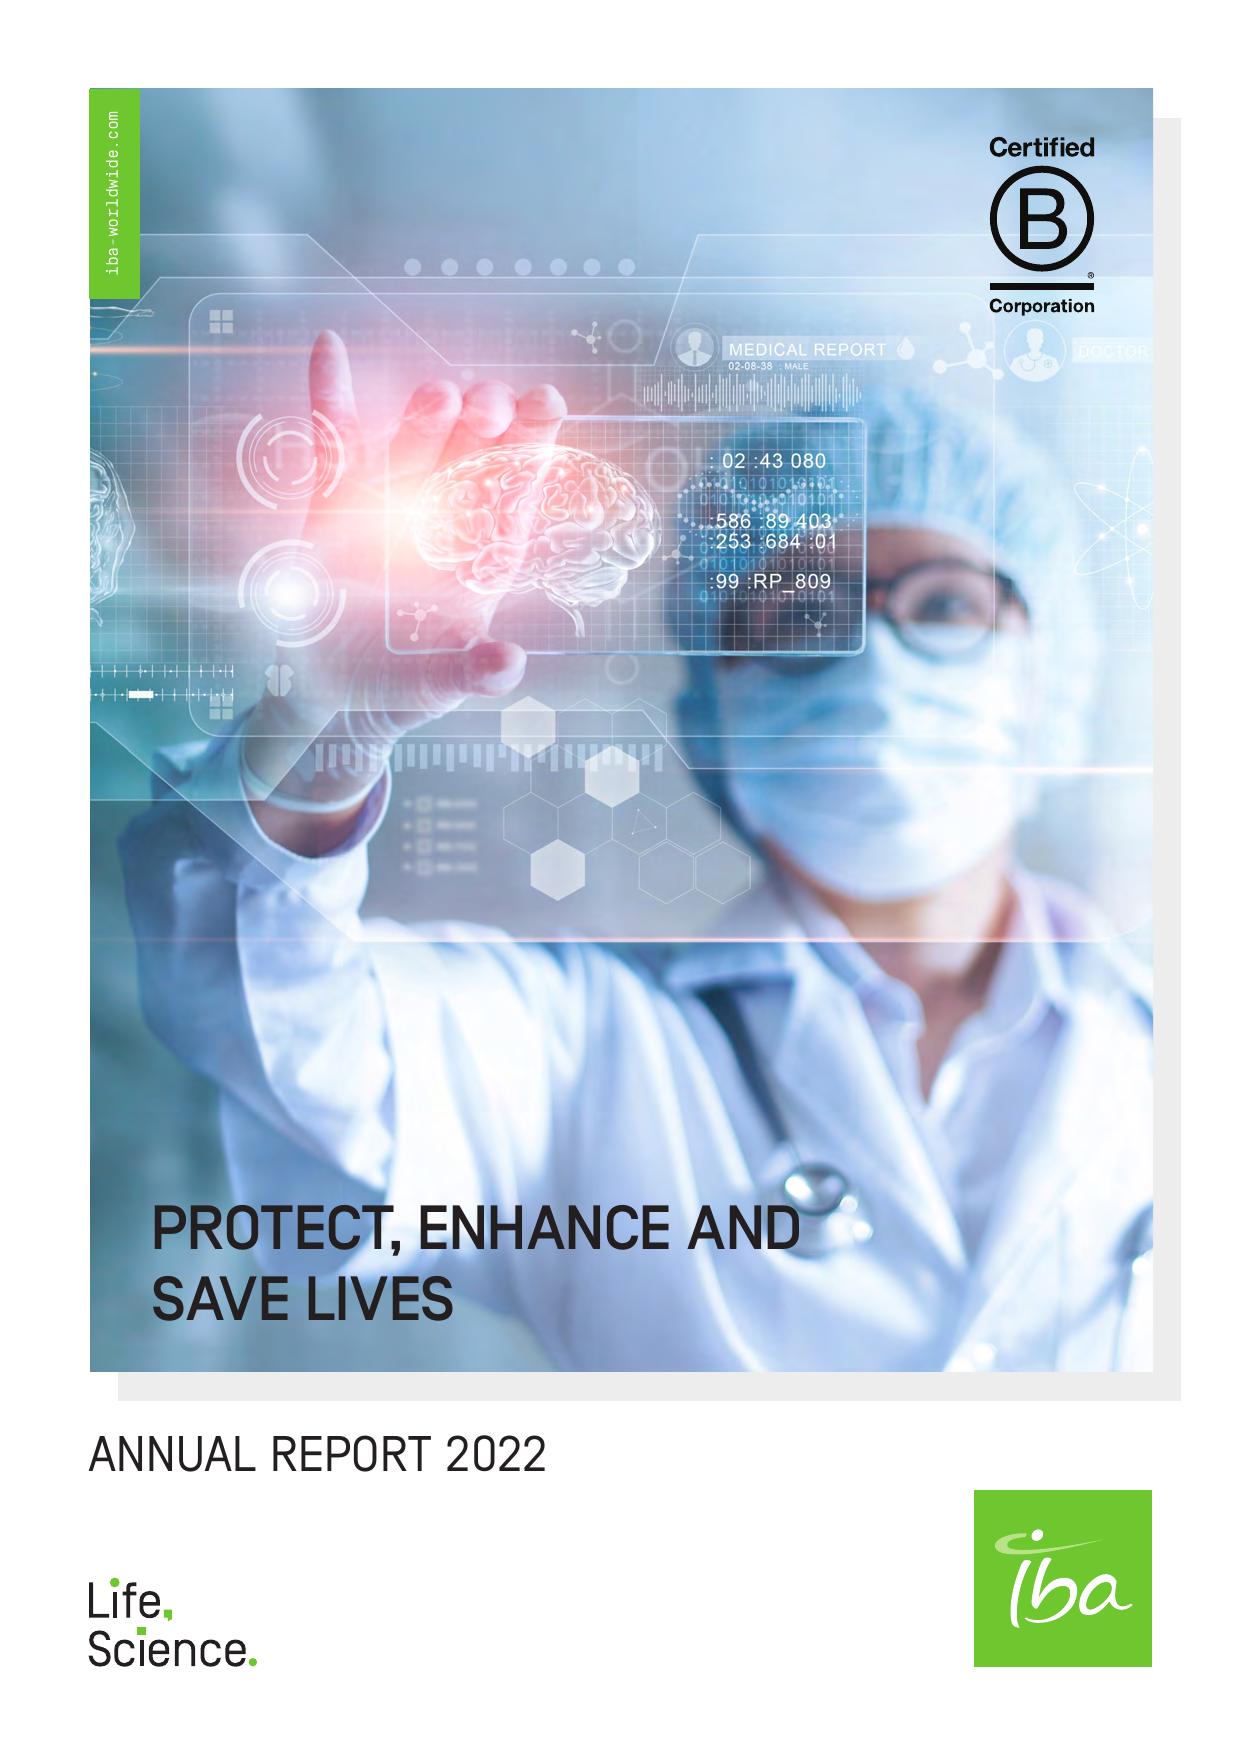 IBA-WORLDWIDE 2023 Annual Report